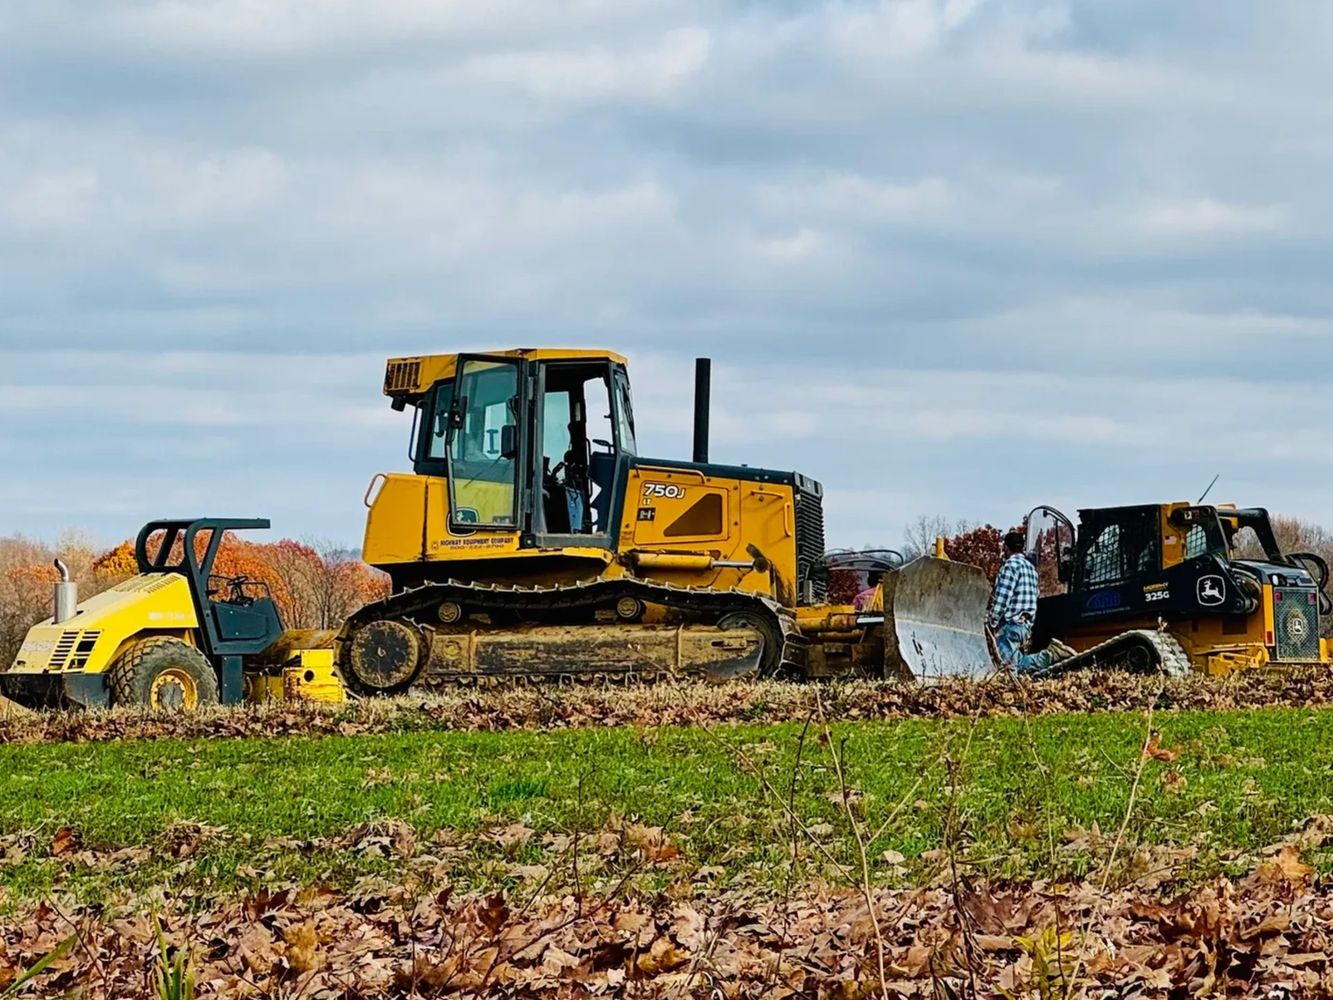 Roller, Bulldozer, Skid Steer excavating for building pad, foundation excavation.